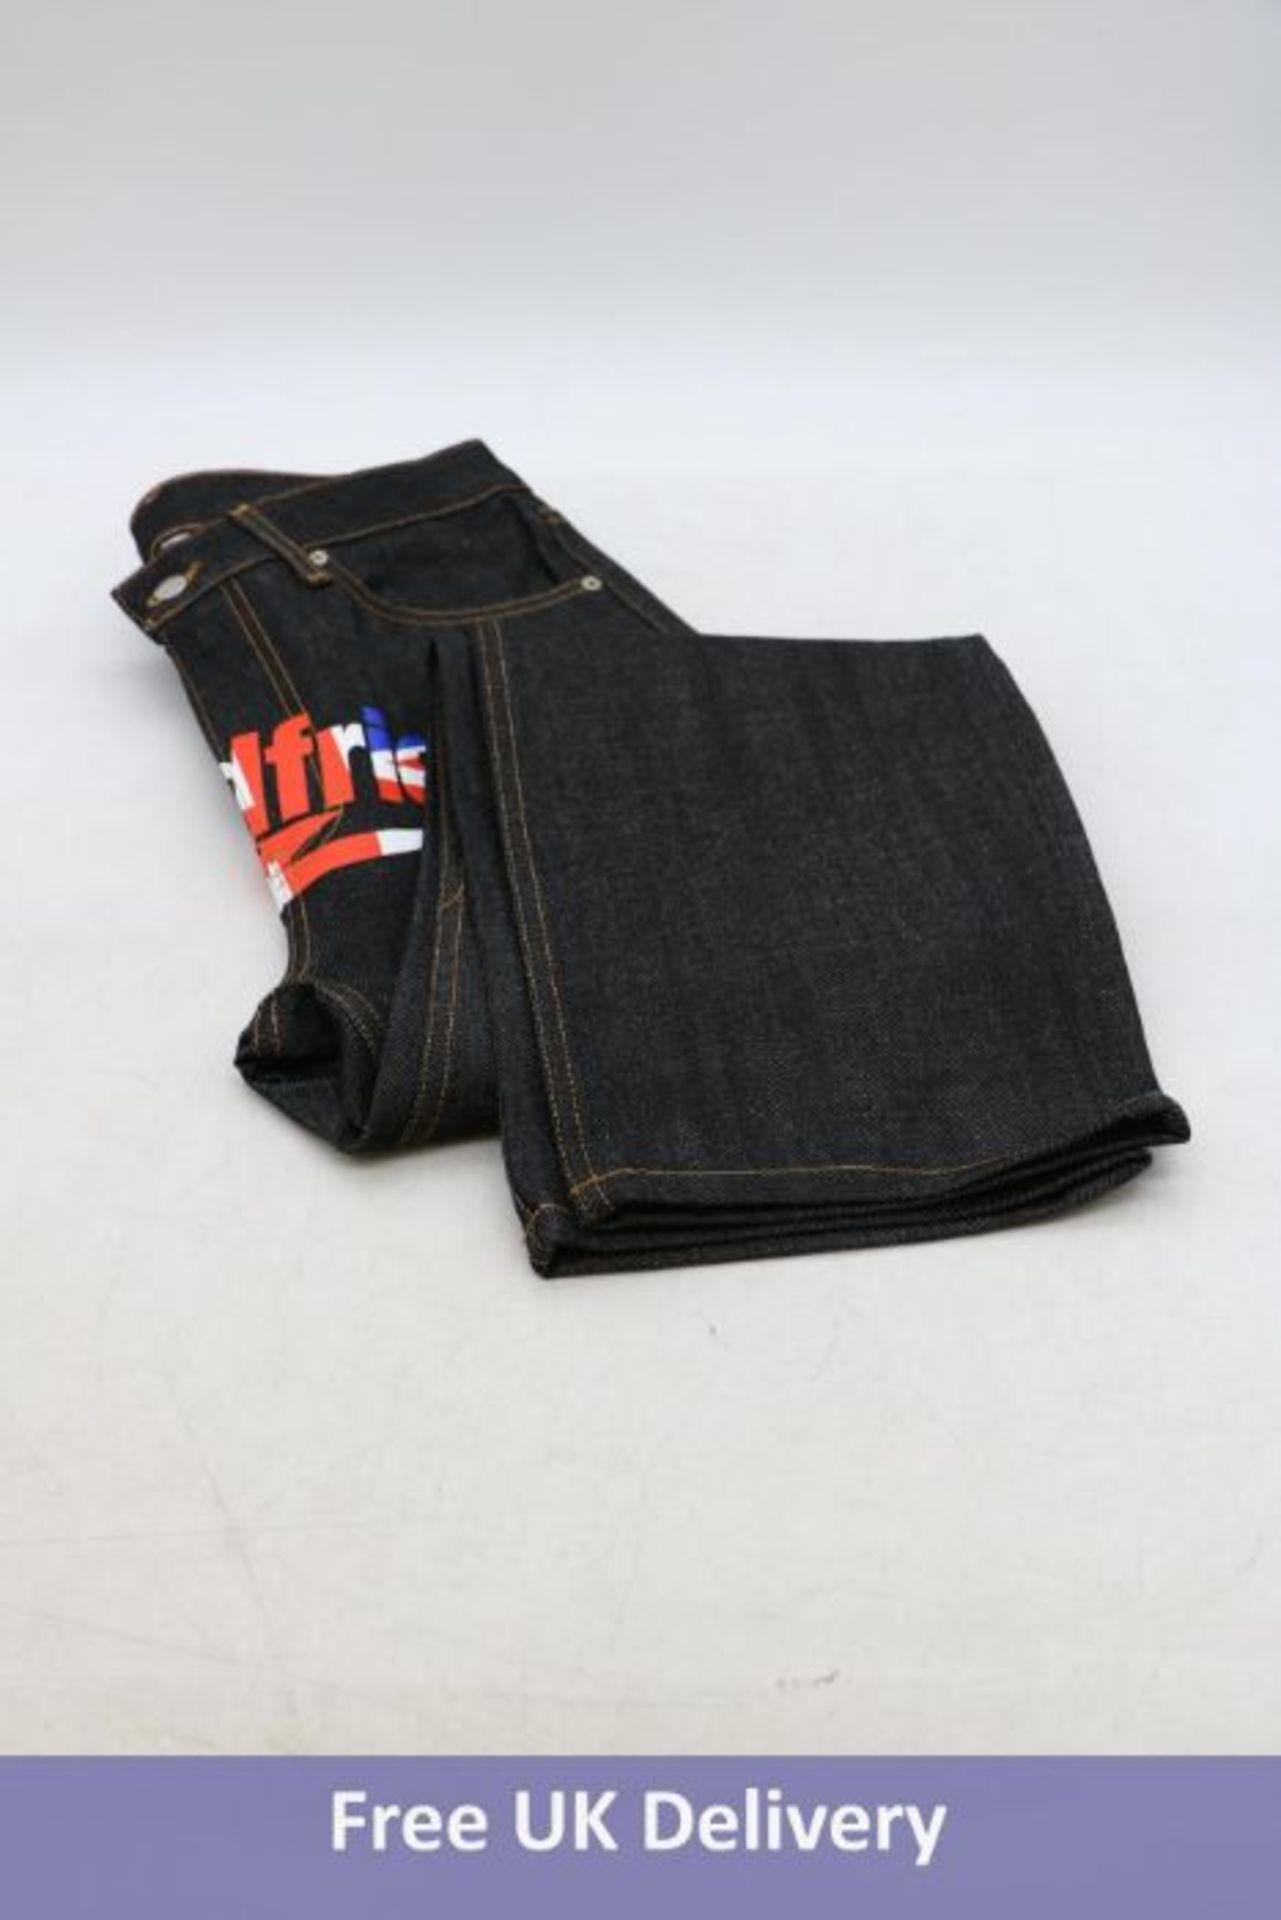 Three BadFriend Men's Streetwear, Y2K Union Jack Denim Jeans, Black, 34W - Image 3 of 3